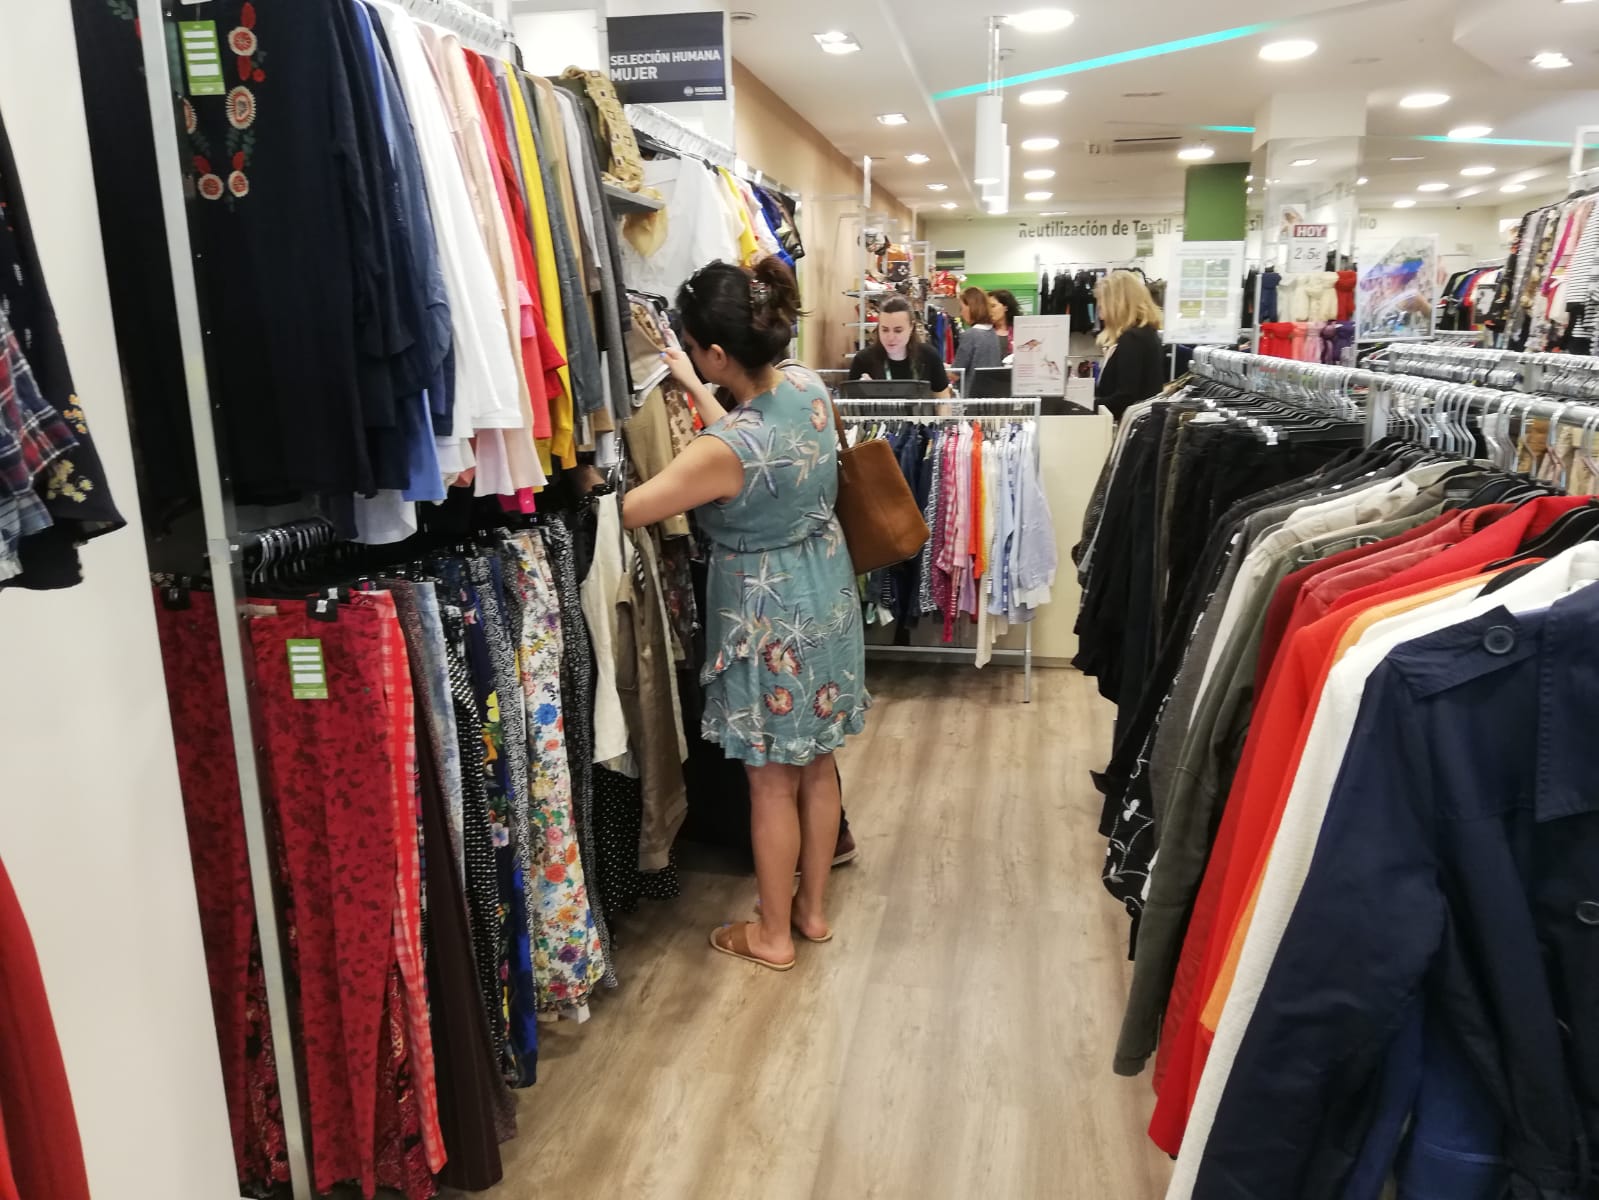 Humana Spain on Twitter: "¡Abrimos segunda tienda de #modasostenible Valencia! Está en pleno centro, en la calle San Vicente Mártir, 72 #HumanaenValencia https://t.co/kjNXwGj119" / Twitter